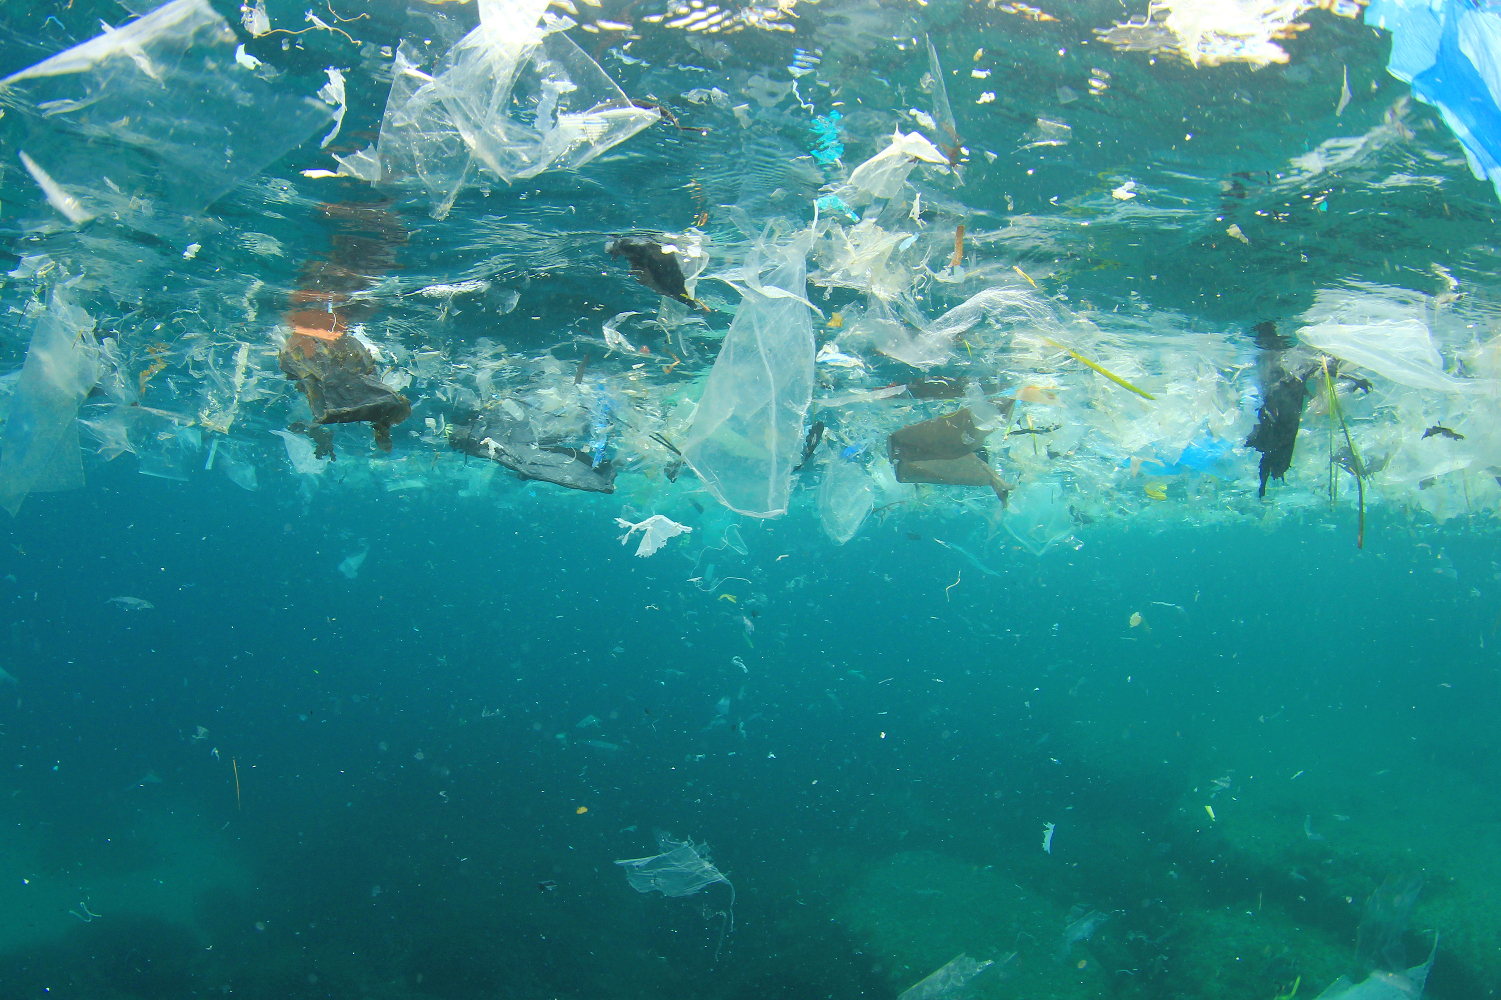 More information about "Περίπου 229.000 τόνοι πλαστικών καταλήγουν ετησίως στη Μεσόγειο Θάλασσα"